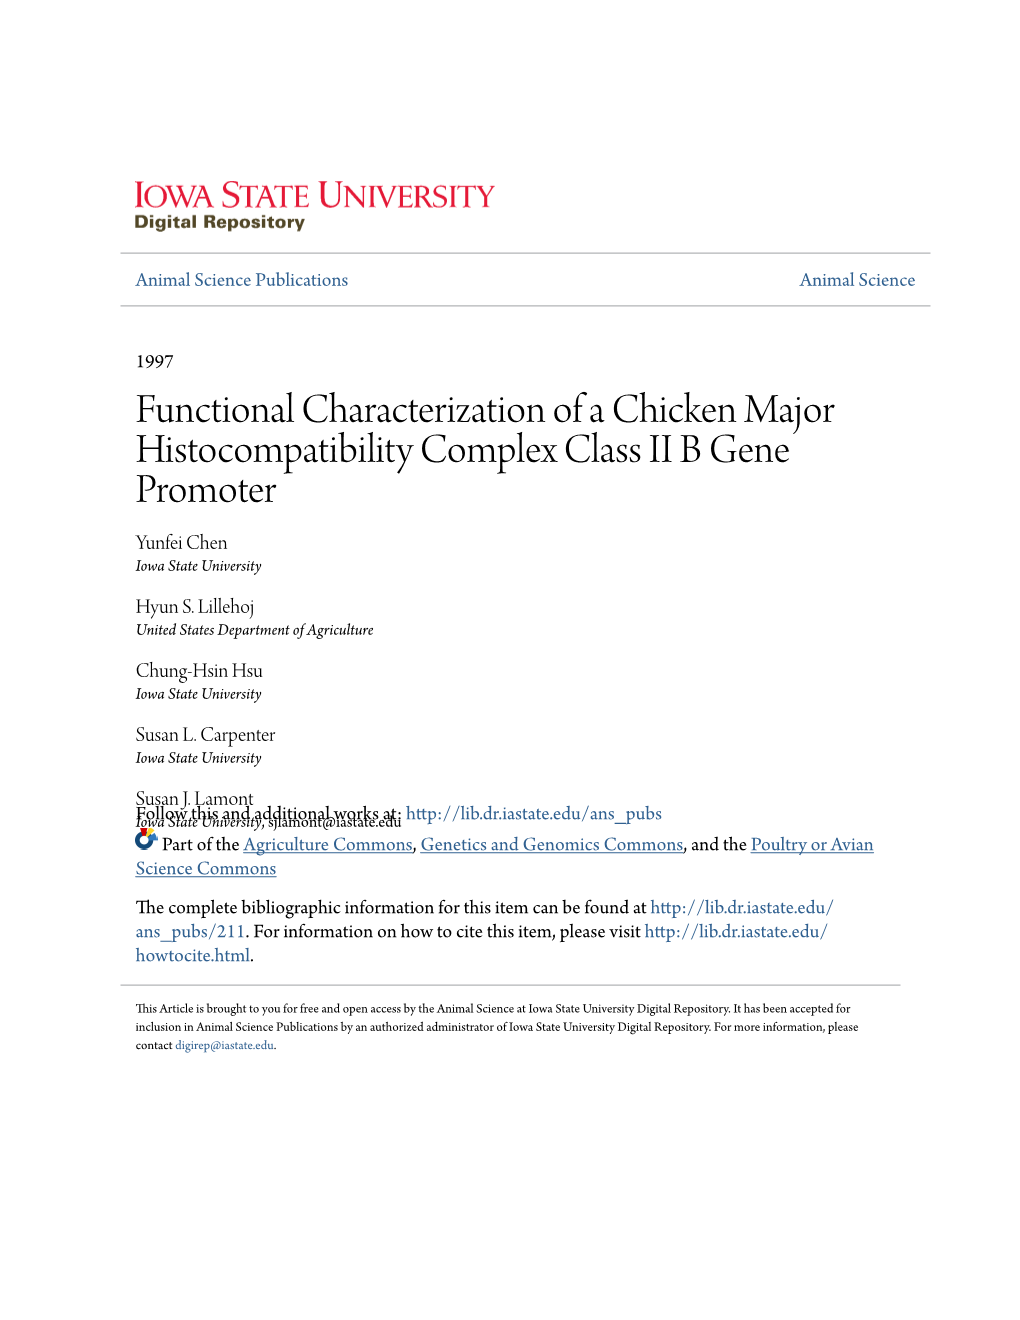 Functional Characterization of a Chicken Major Histocompatibility Complex Class II B Gene Promoter Yunfei Chen Iowa State University